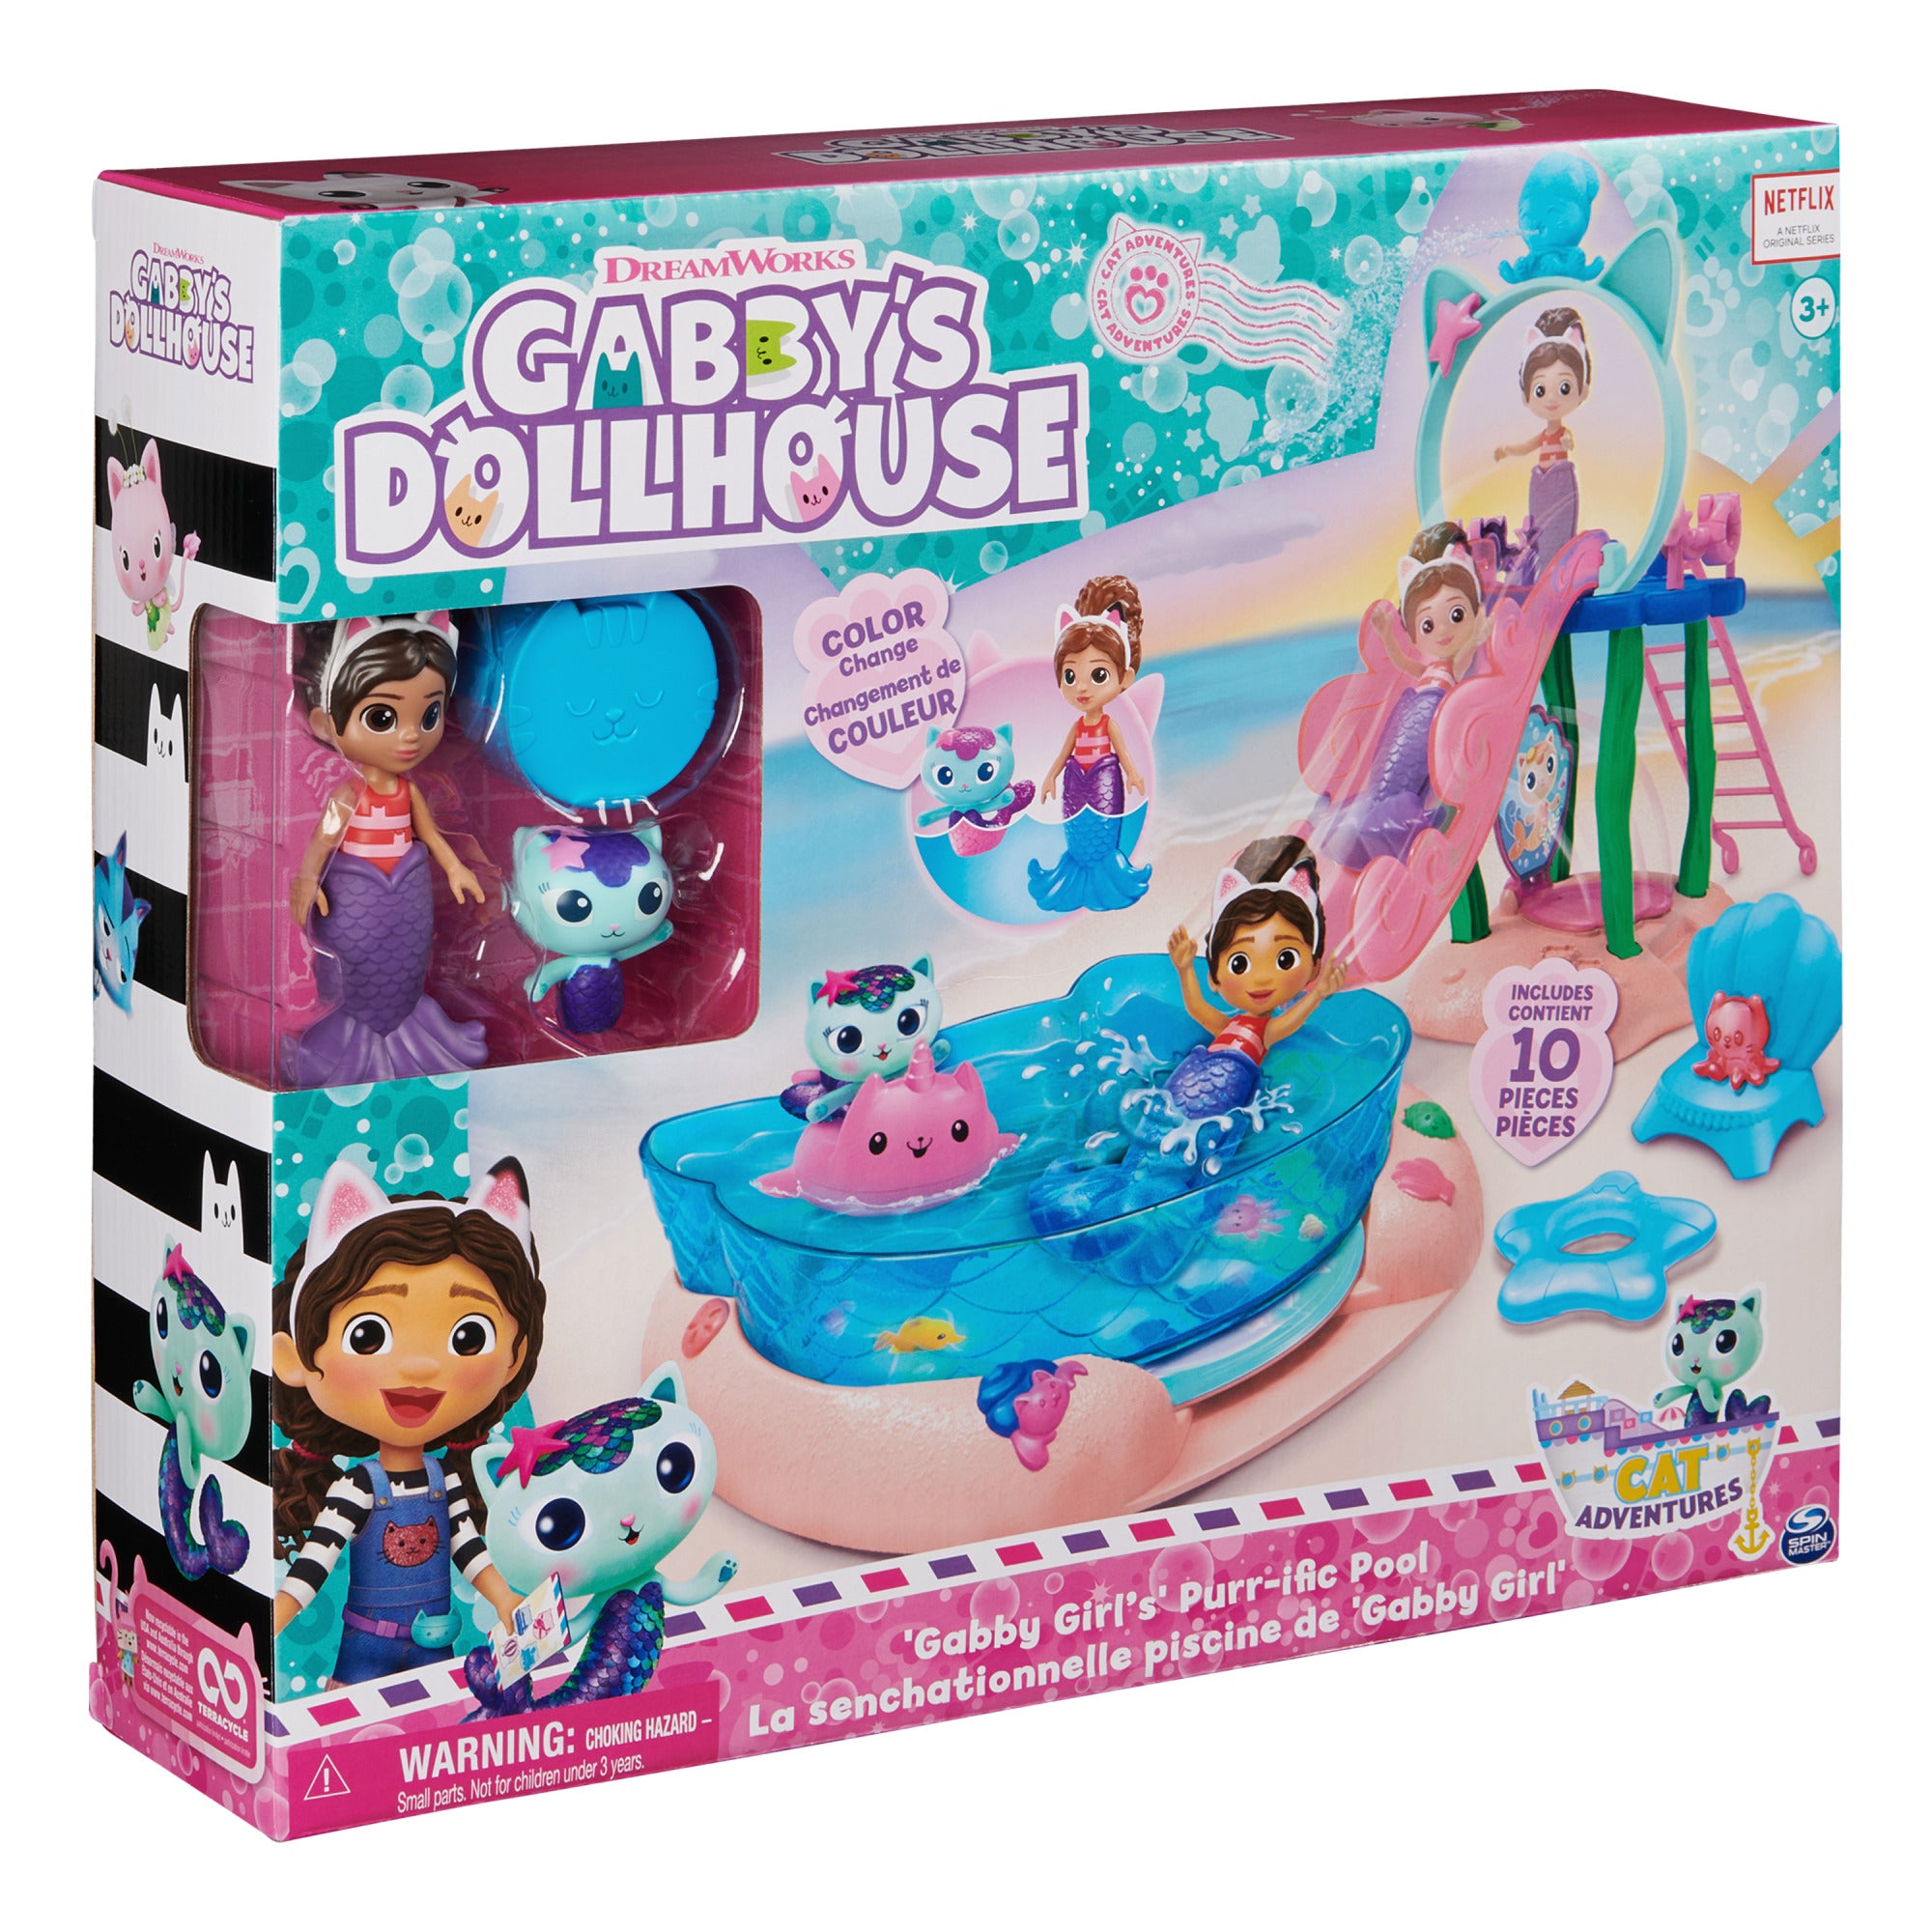 Gabby's Dollhouse Gabby Girl's Purr-ific Pool